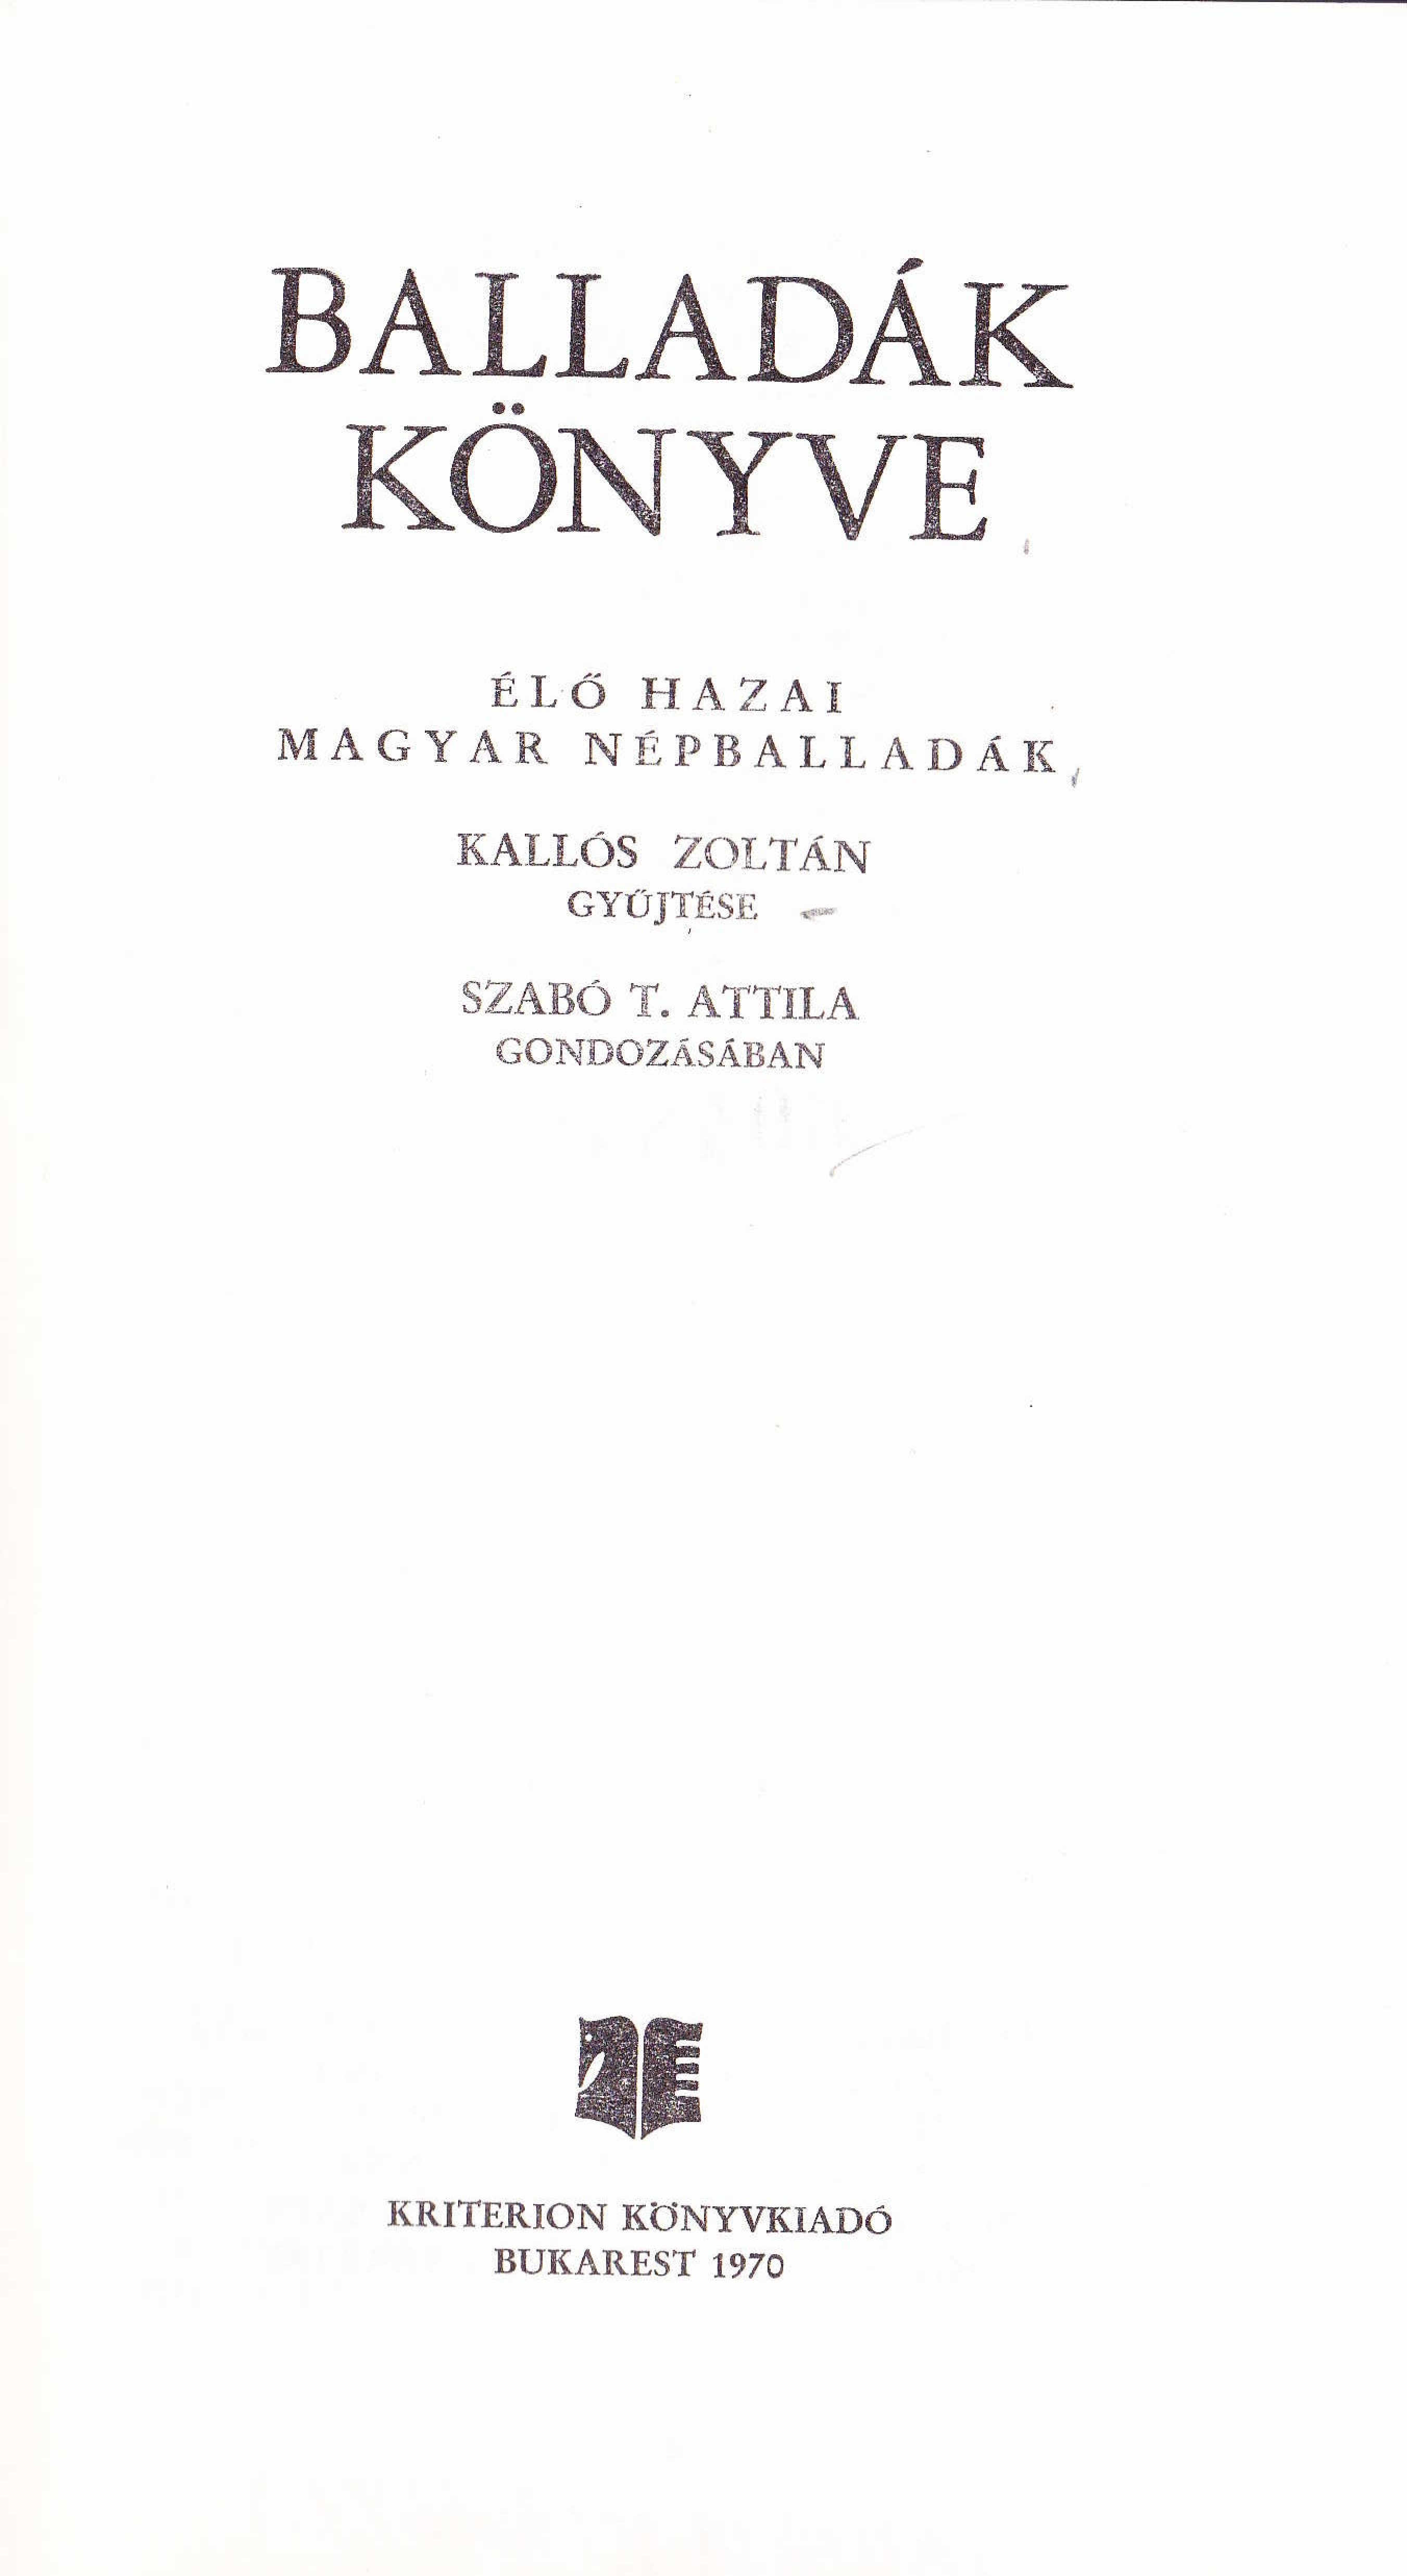 The title page of the book: Kallós, Zoltán and Attila Szabó T. 1970. Balladák könyve: Élő hazai magyar népballadák (Book of Ballads: Living Hungarian Folk Ballads from Romania). Bucharest: Kriterion